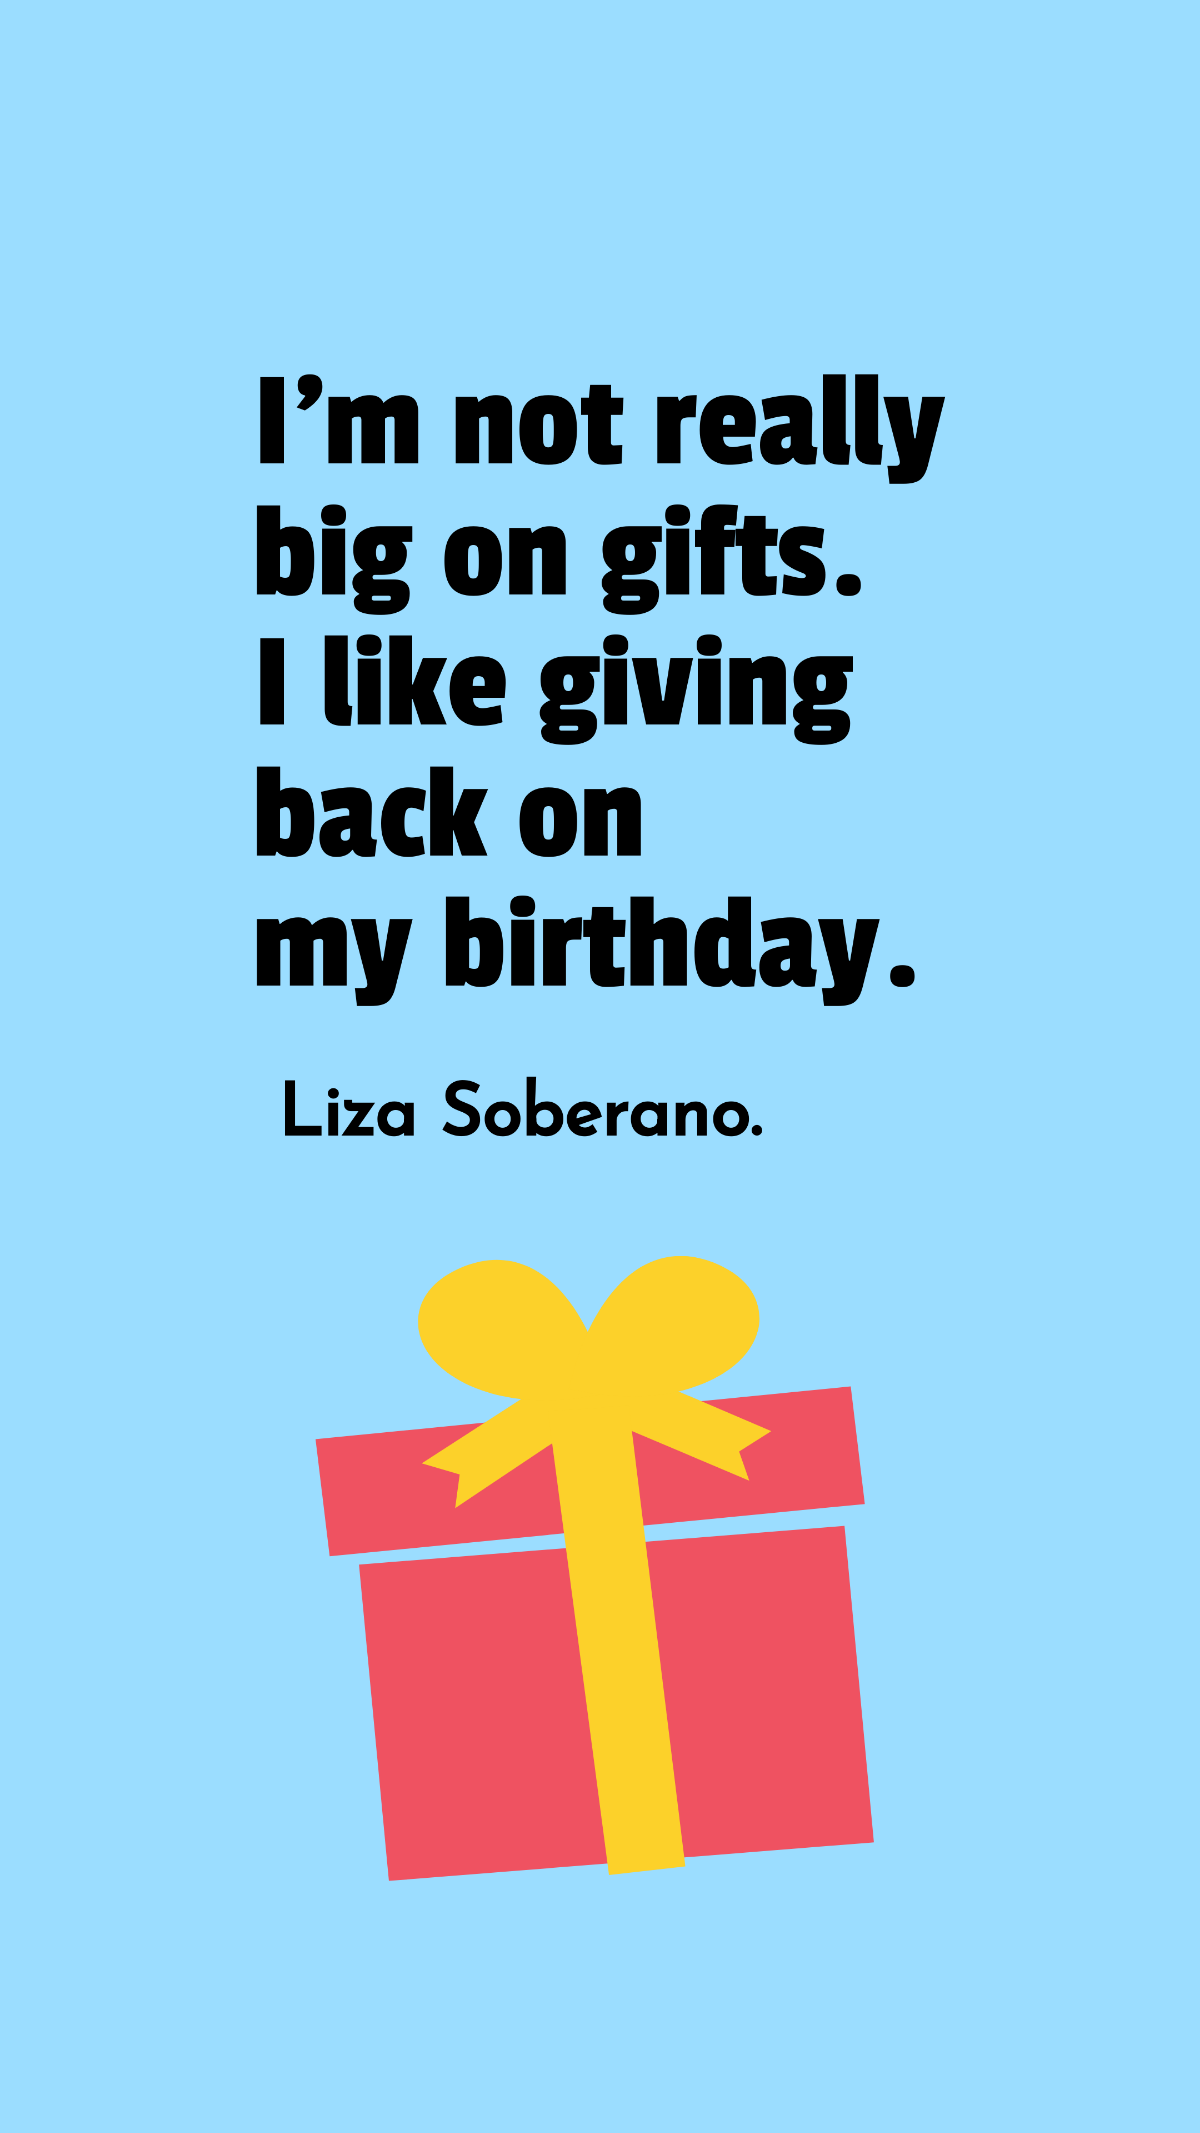 Liza Soberano - I'm not really big on gifts. I like giving back on my birthday. Template